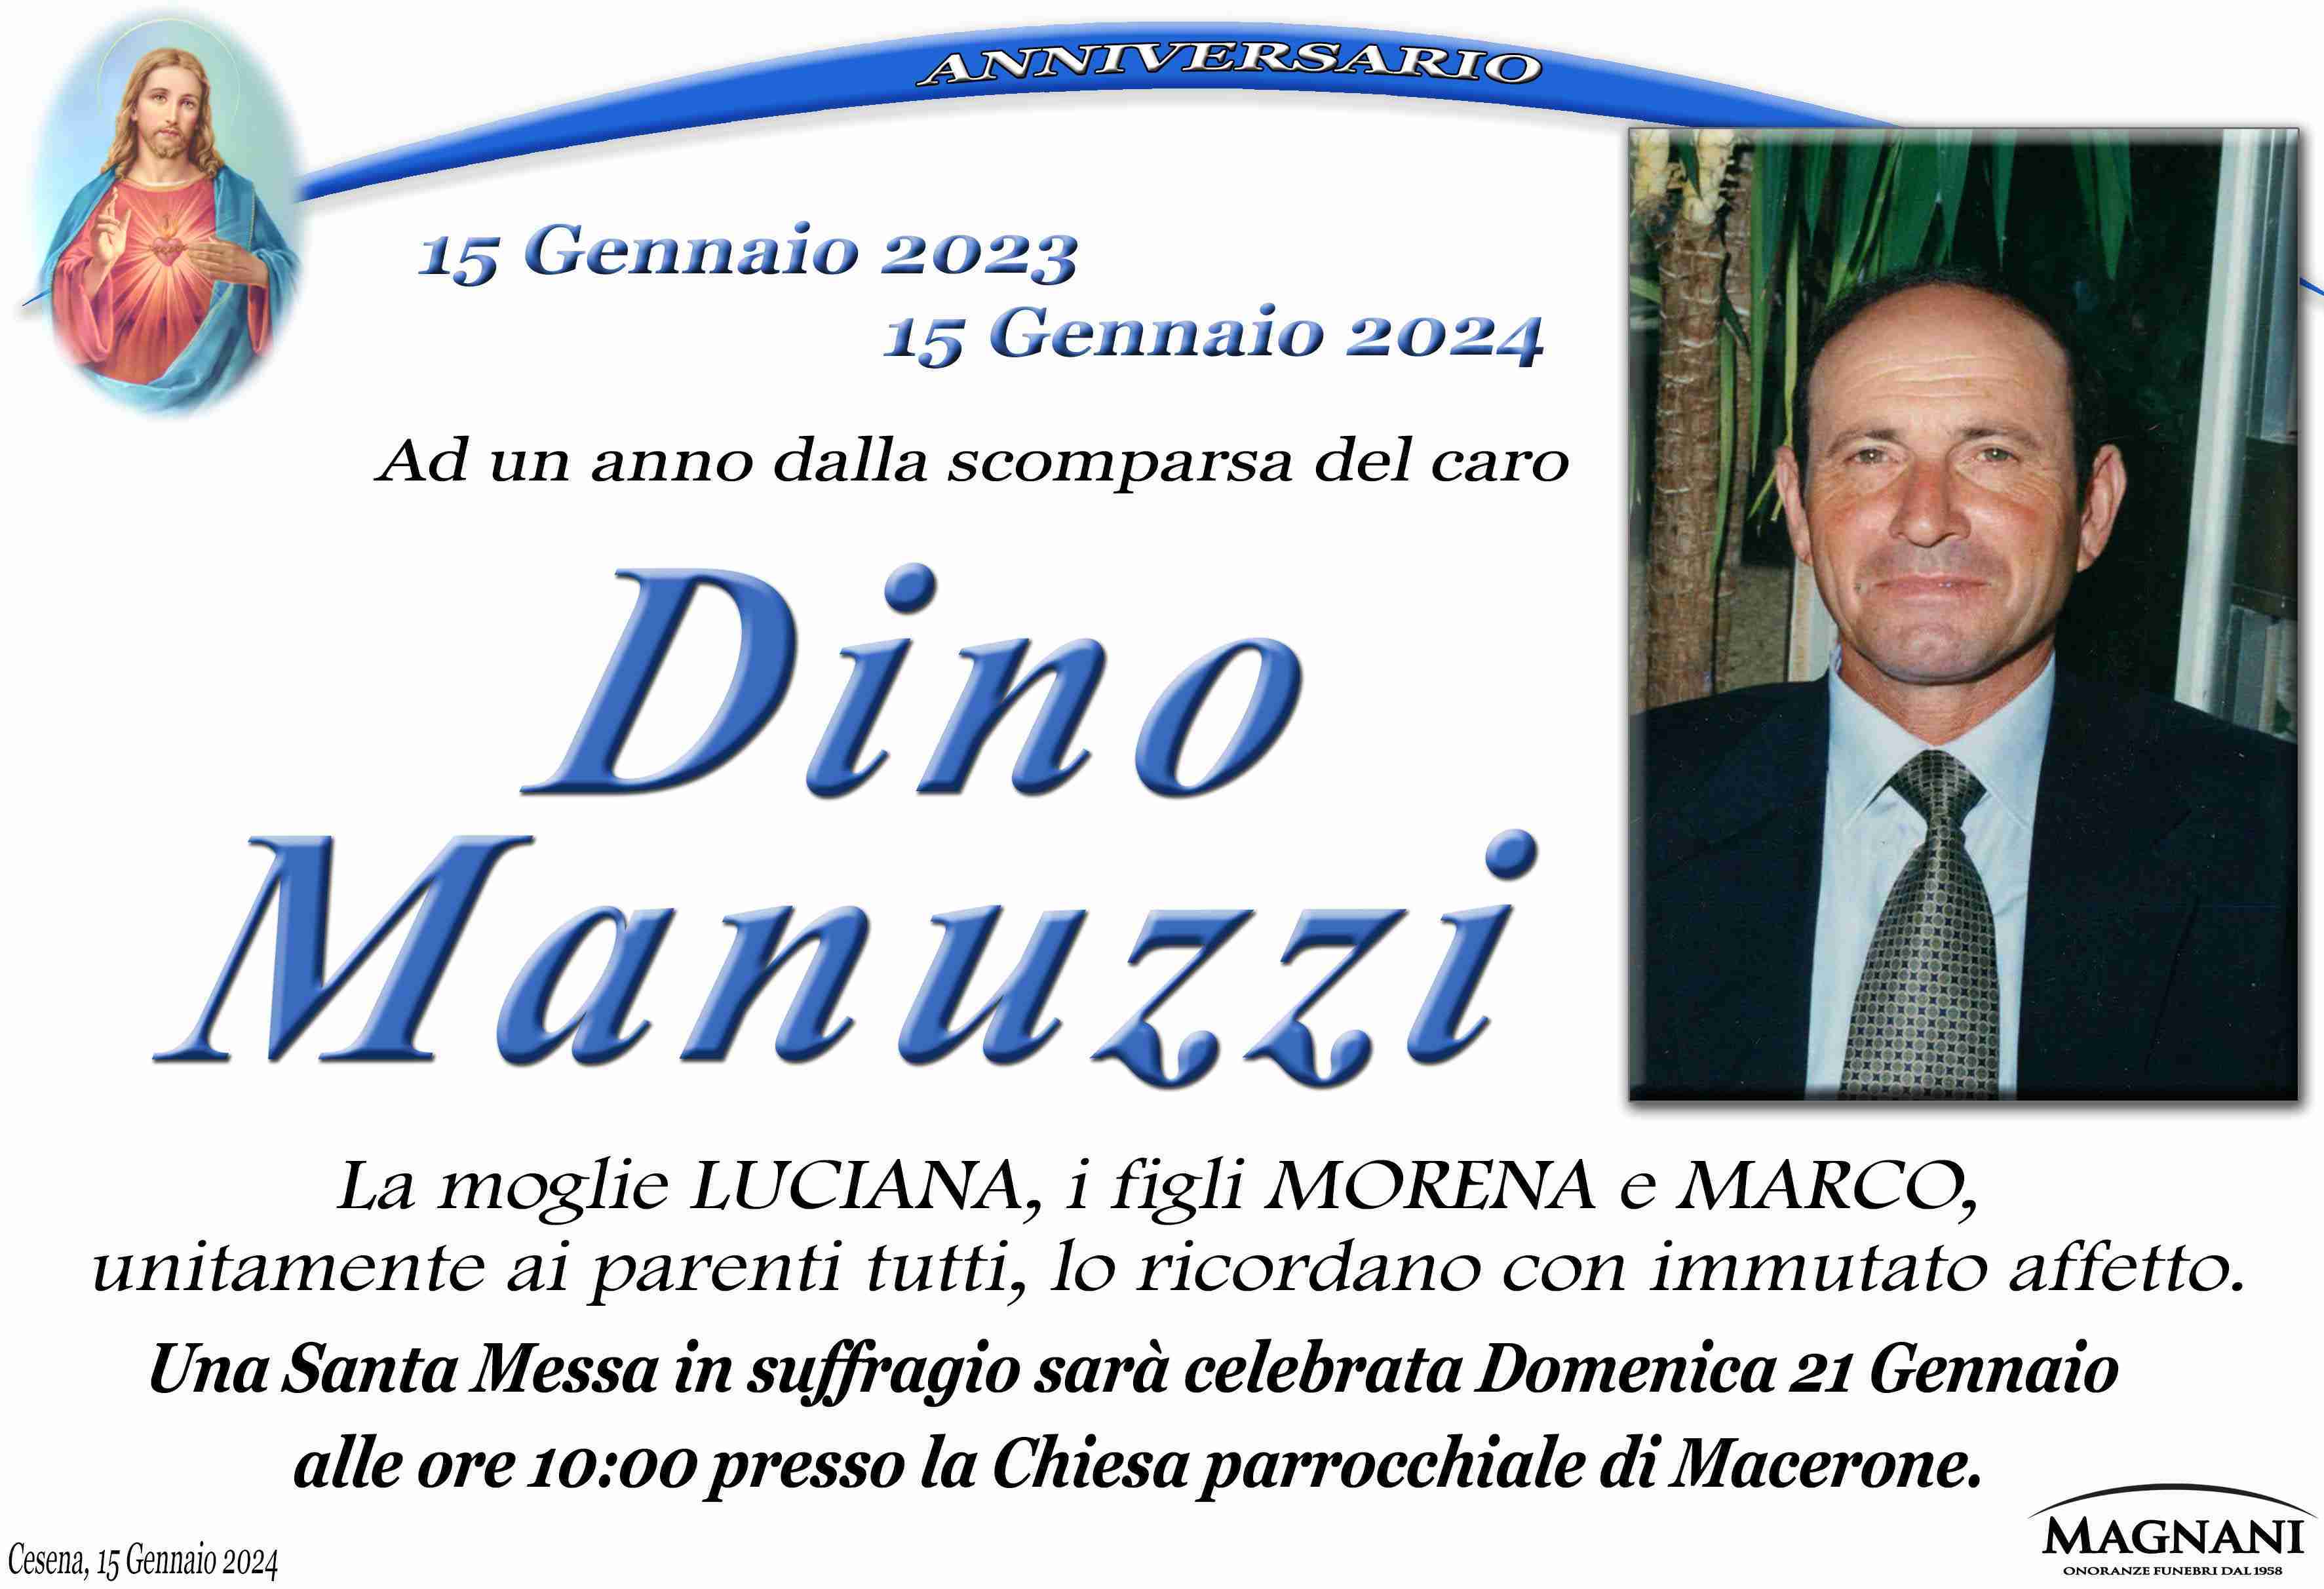 Dino Manuzzi